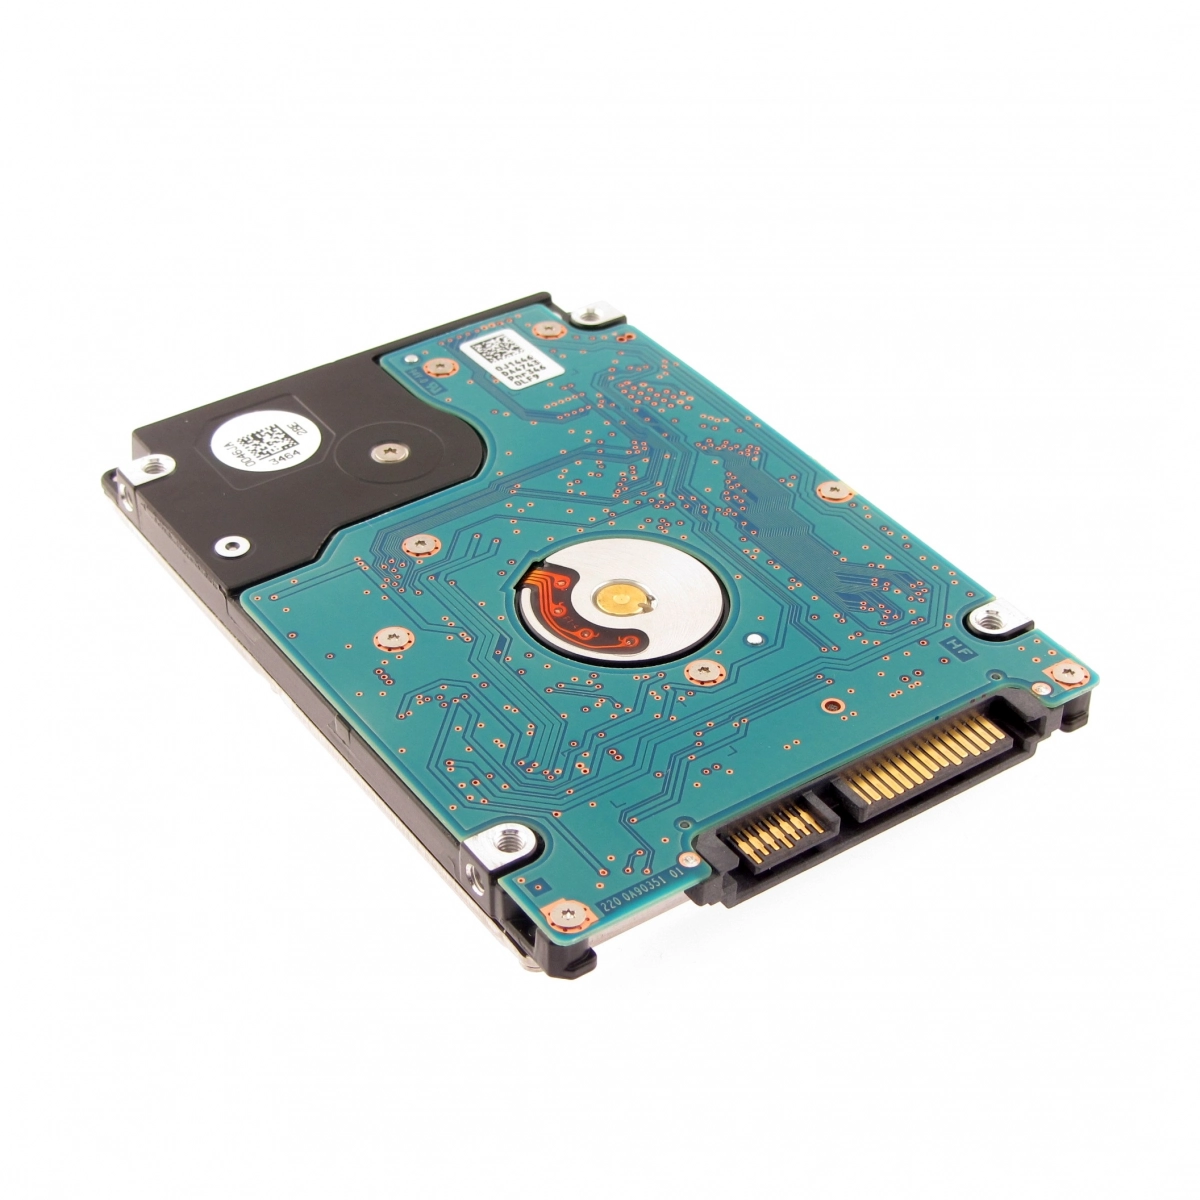 Notebook-Festplatte 1TB, 5400rpm, 128MB für TOSHIBA Satellite A100-02B